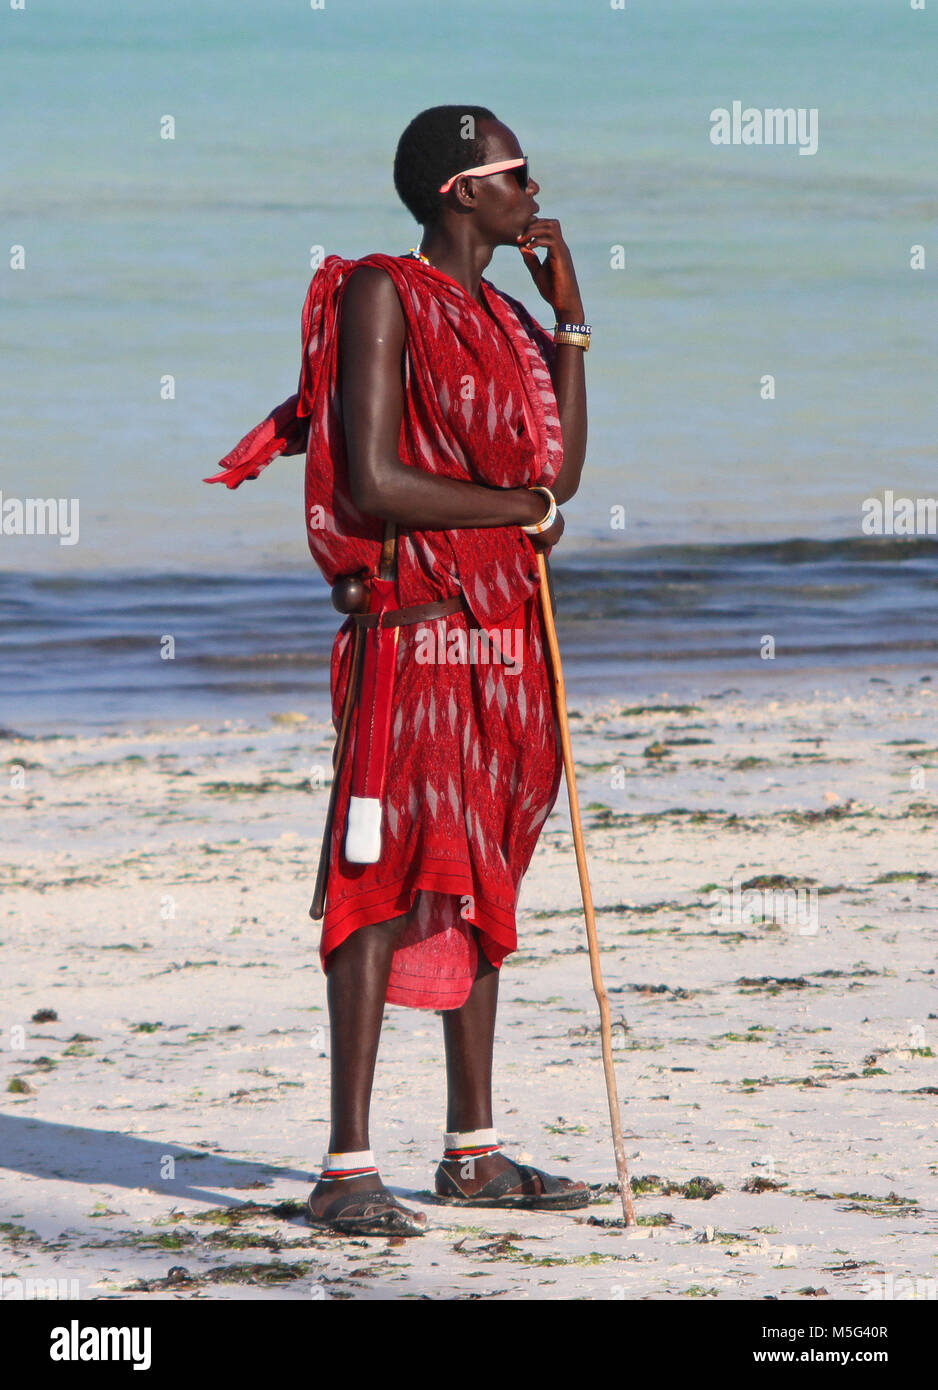 Les Massaïs man standing on the beach, plage de Nungwi, Zanzibar, Tanzanie Banque D'Images